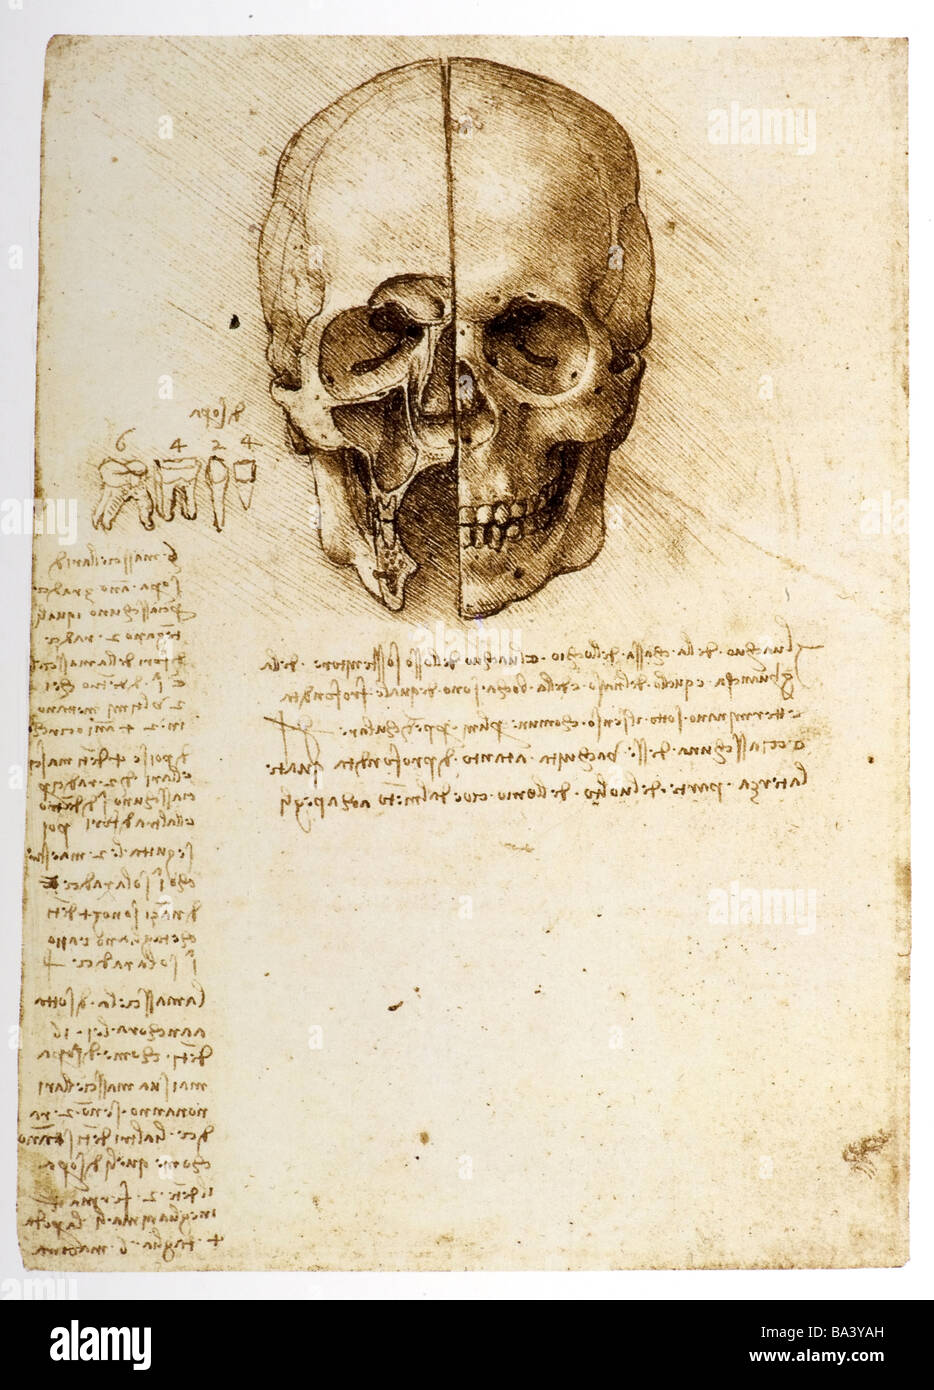 anatomical studies human skull by Leonardo da Vinci Stock Photo